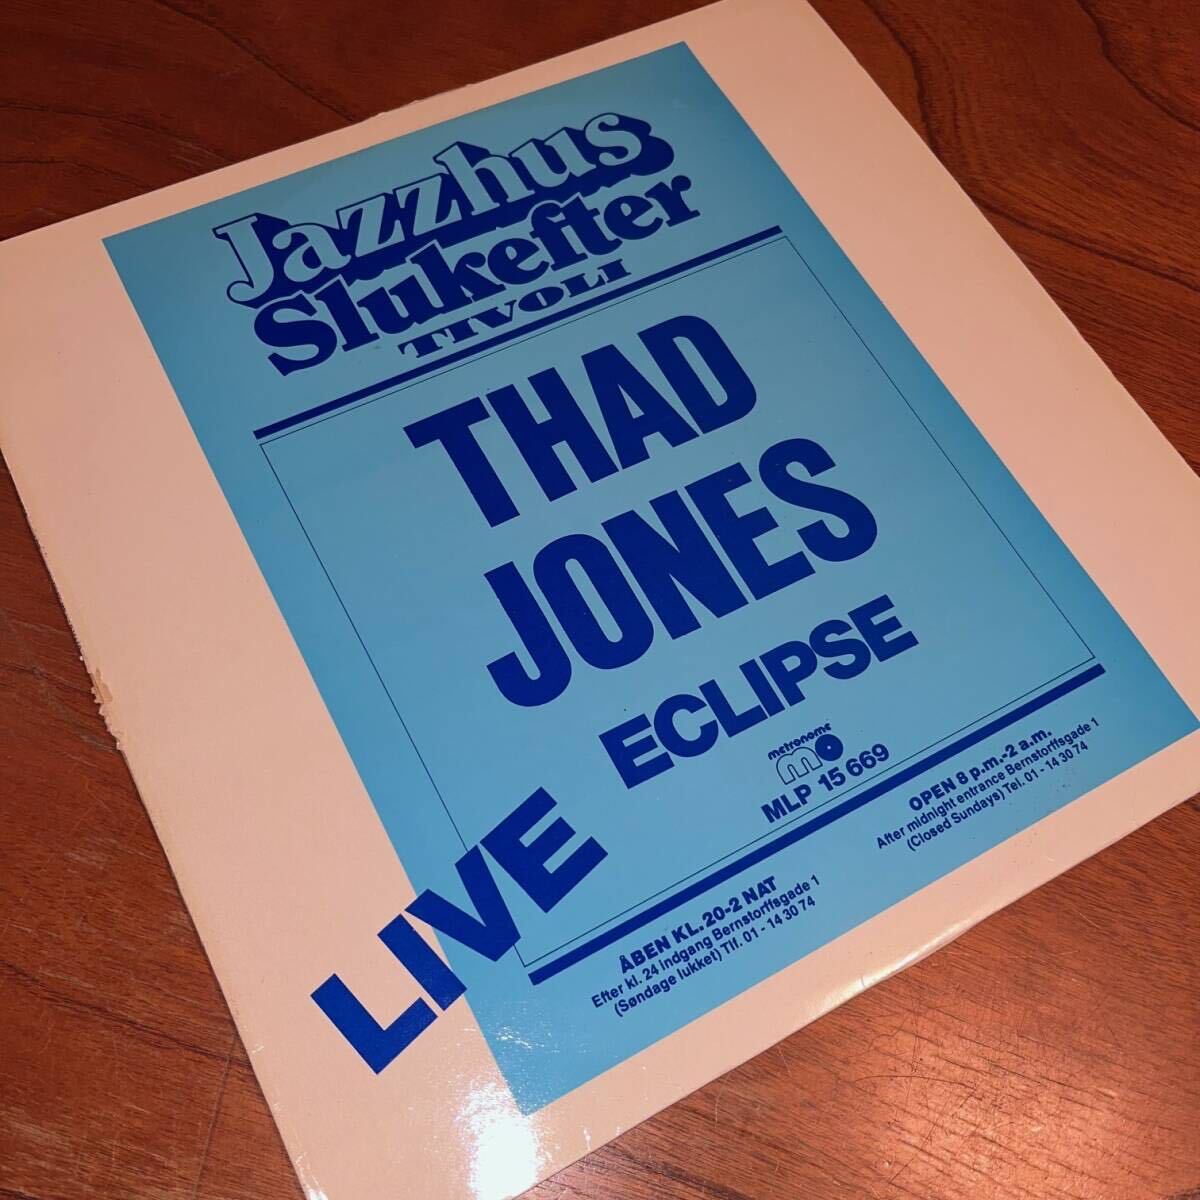 【DENMARK オリジナル METRONOME 欧 ビッグバンド名盤】THAD JONES ECLIPSE LIVE AT JAZZHUS SLUKEFTER TIVOLI/SAHIB SHIHAB/HORACE PARLAN_画像1